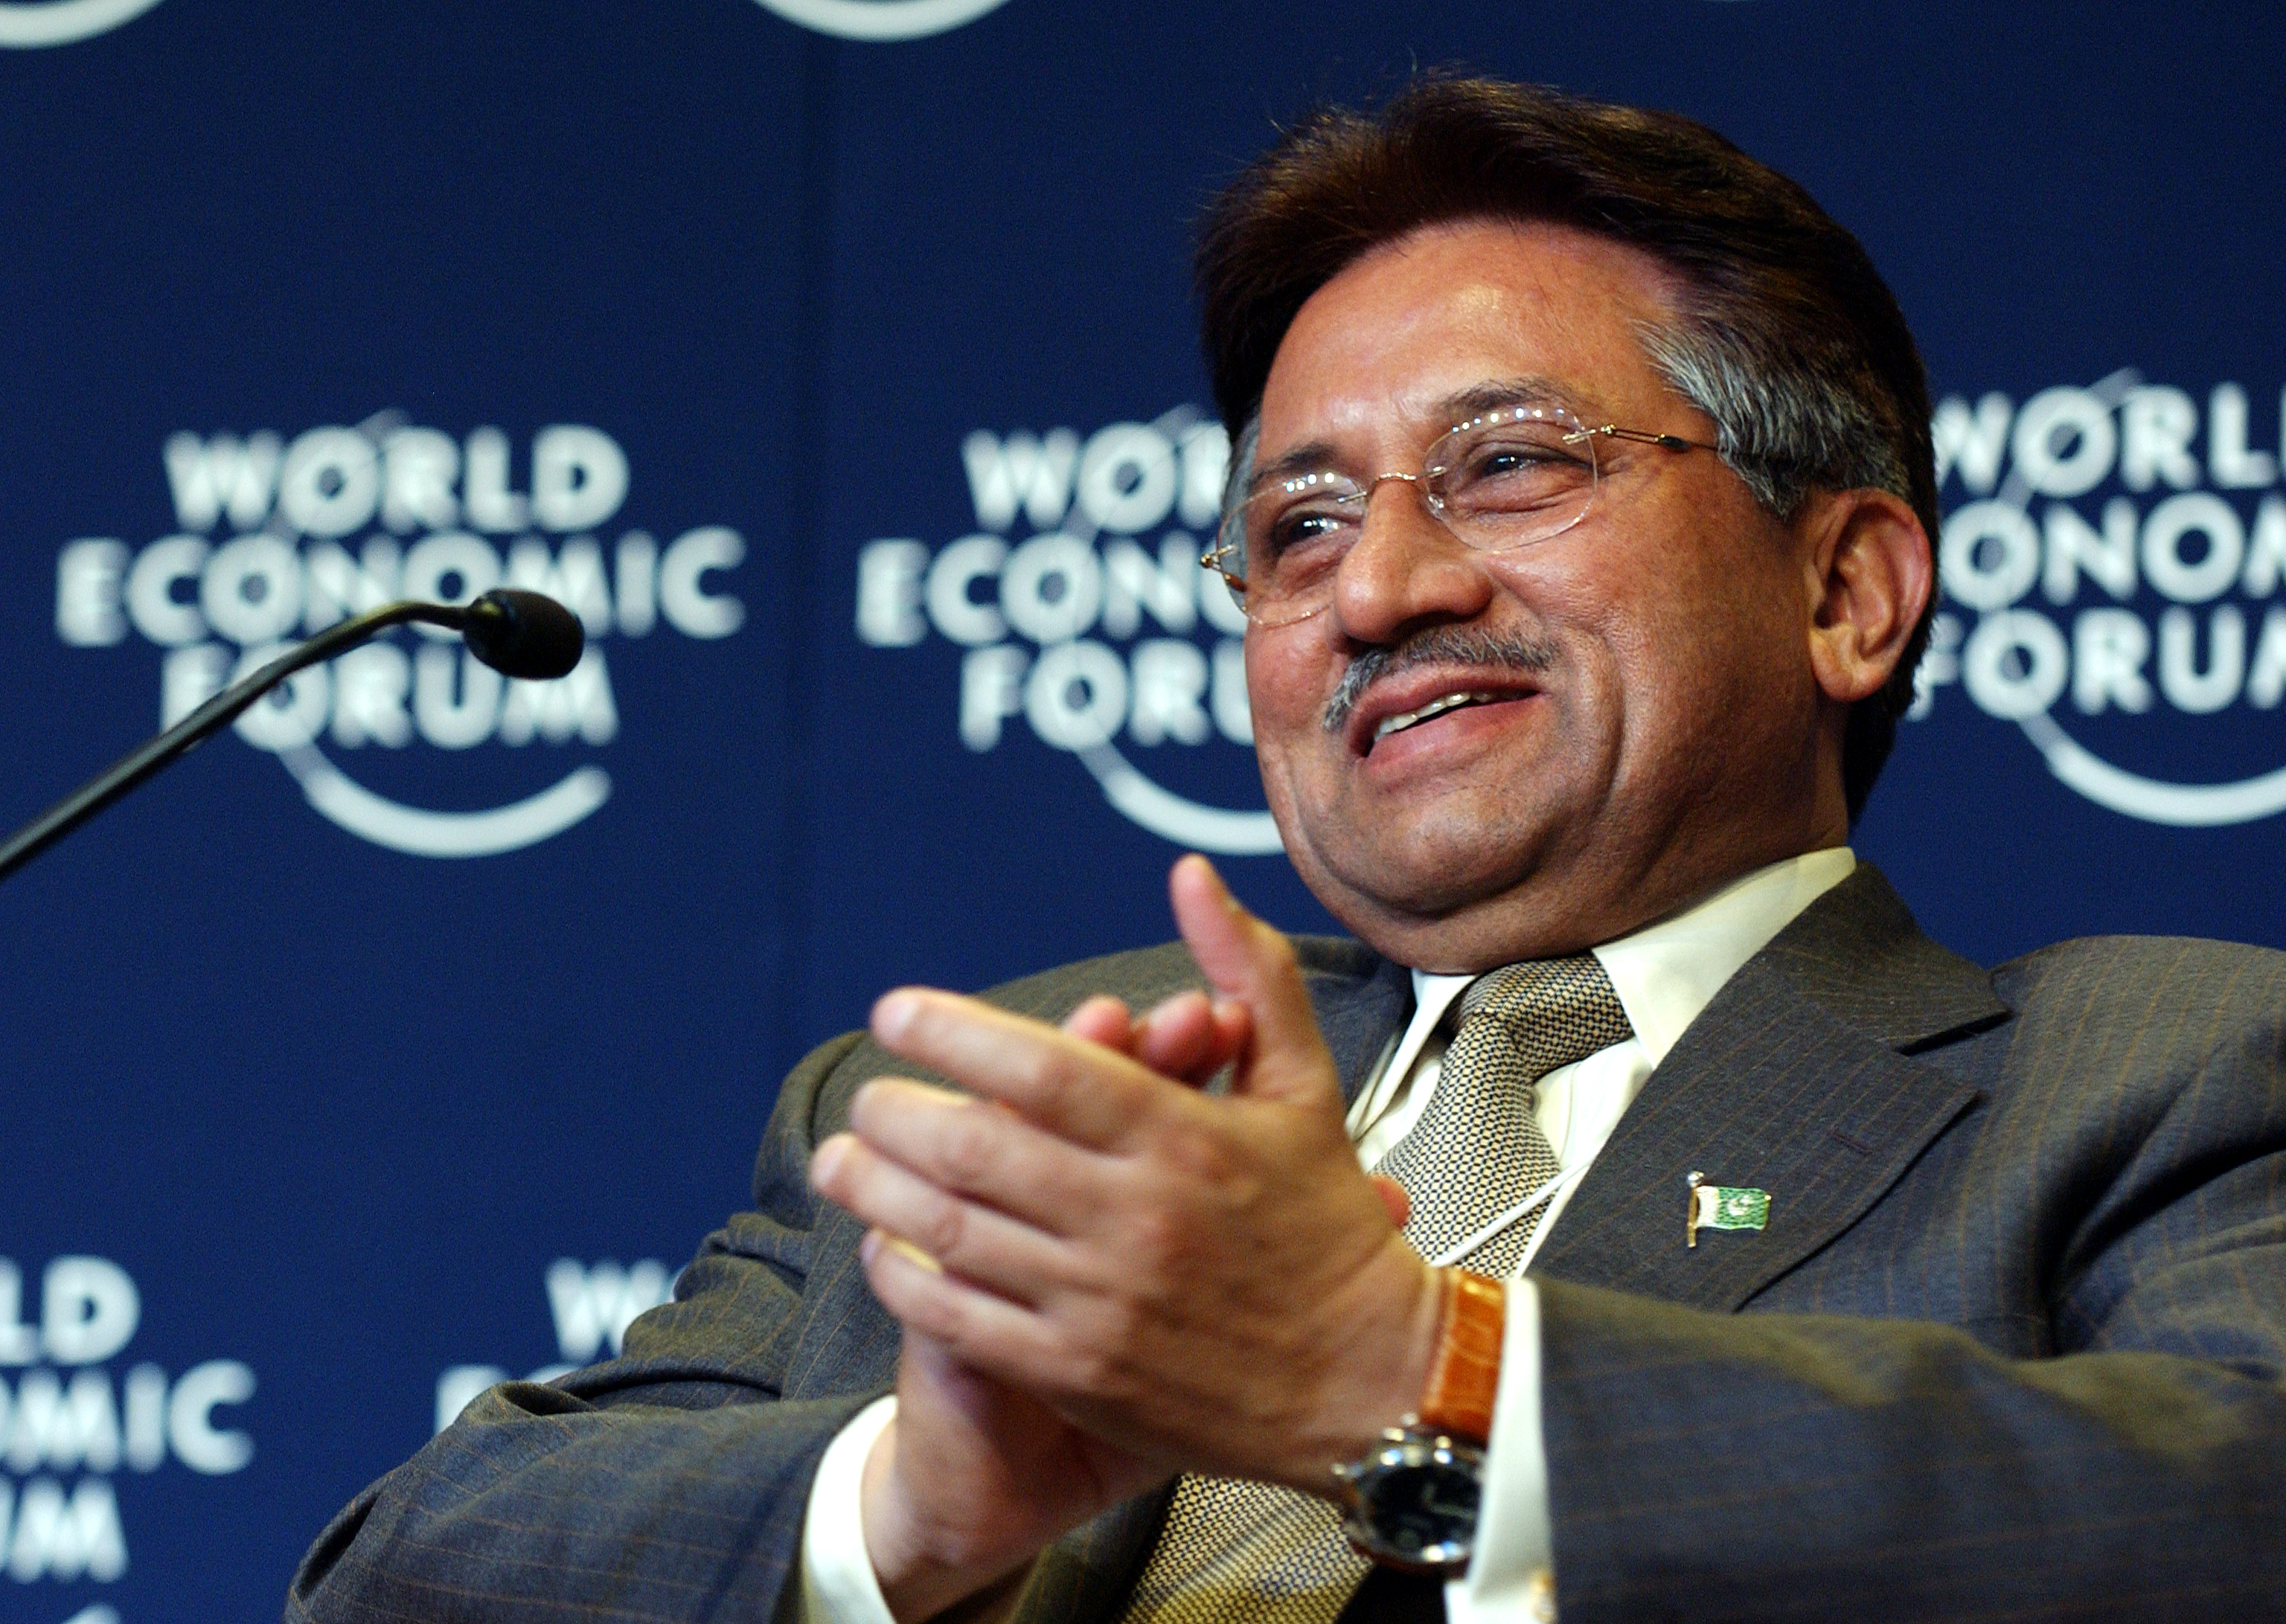 Flickr - World Economic Forum - Pervez Musharraf - World Economic Forum Annual Meeting 2004